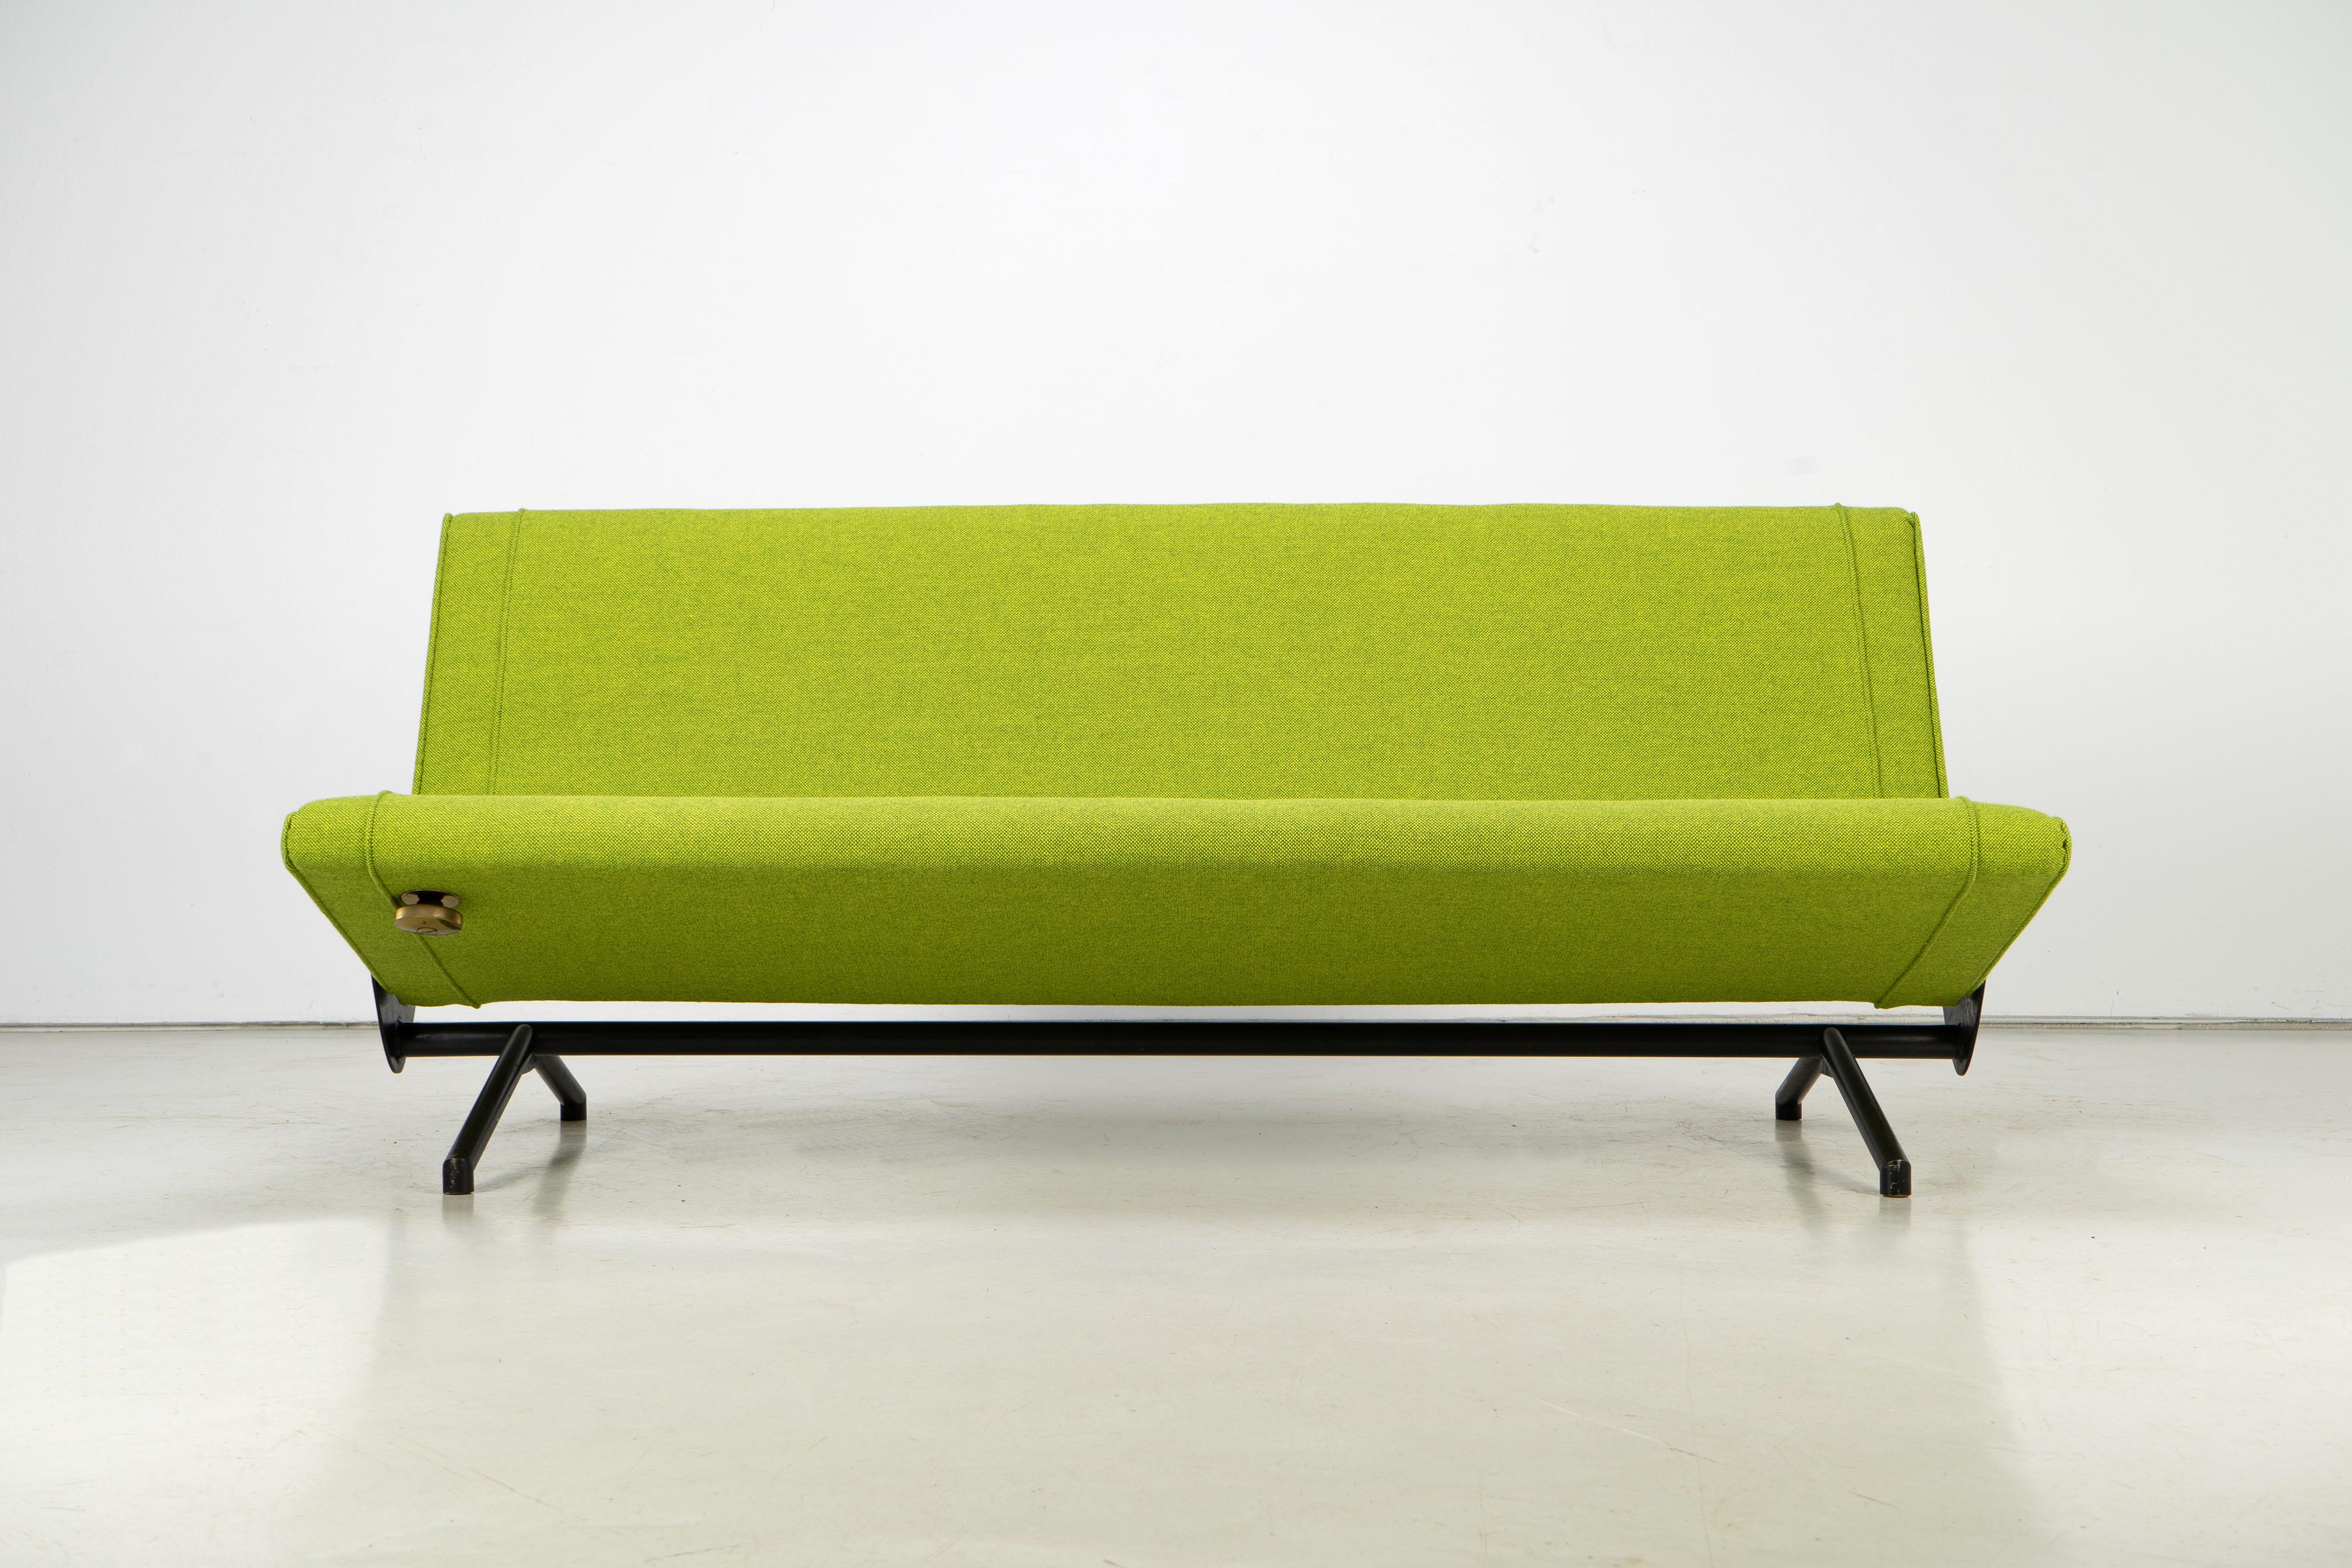 Mid-Century Modern Italian Modern Sofa D70 by Osvaldo Borsani by Tecno, yellow-green Fabric, 1950s